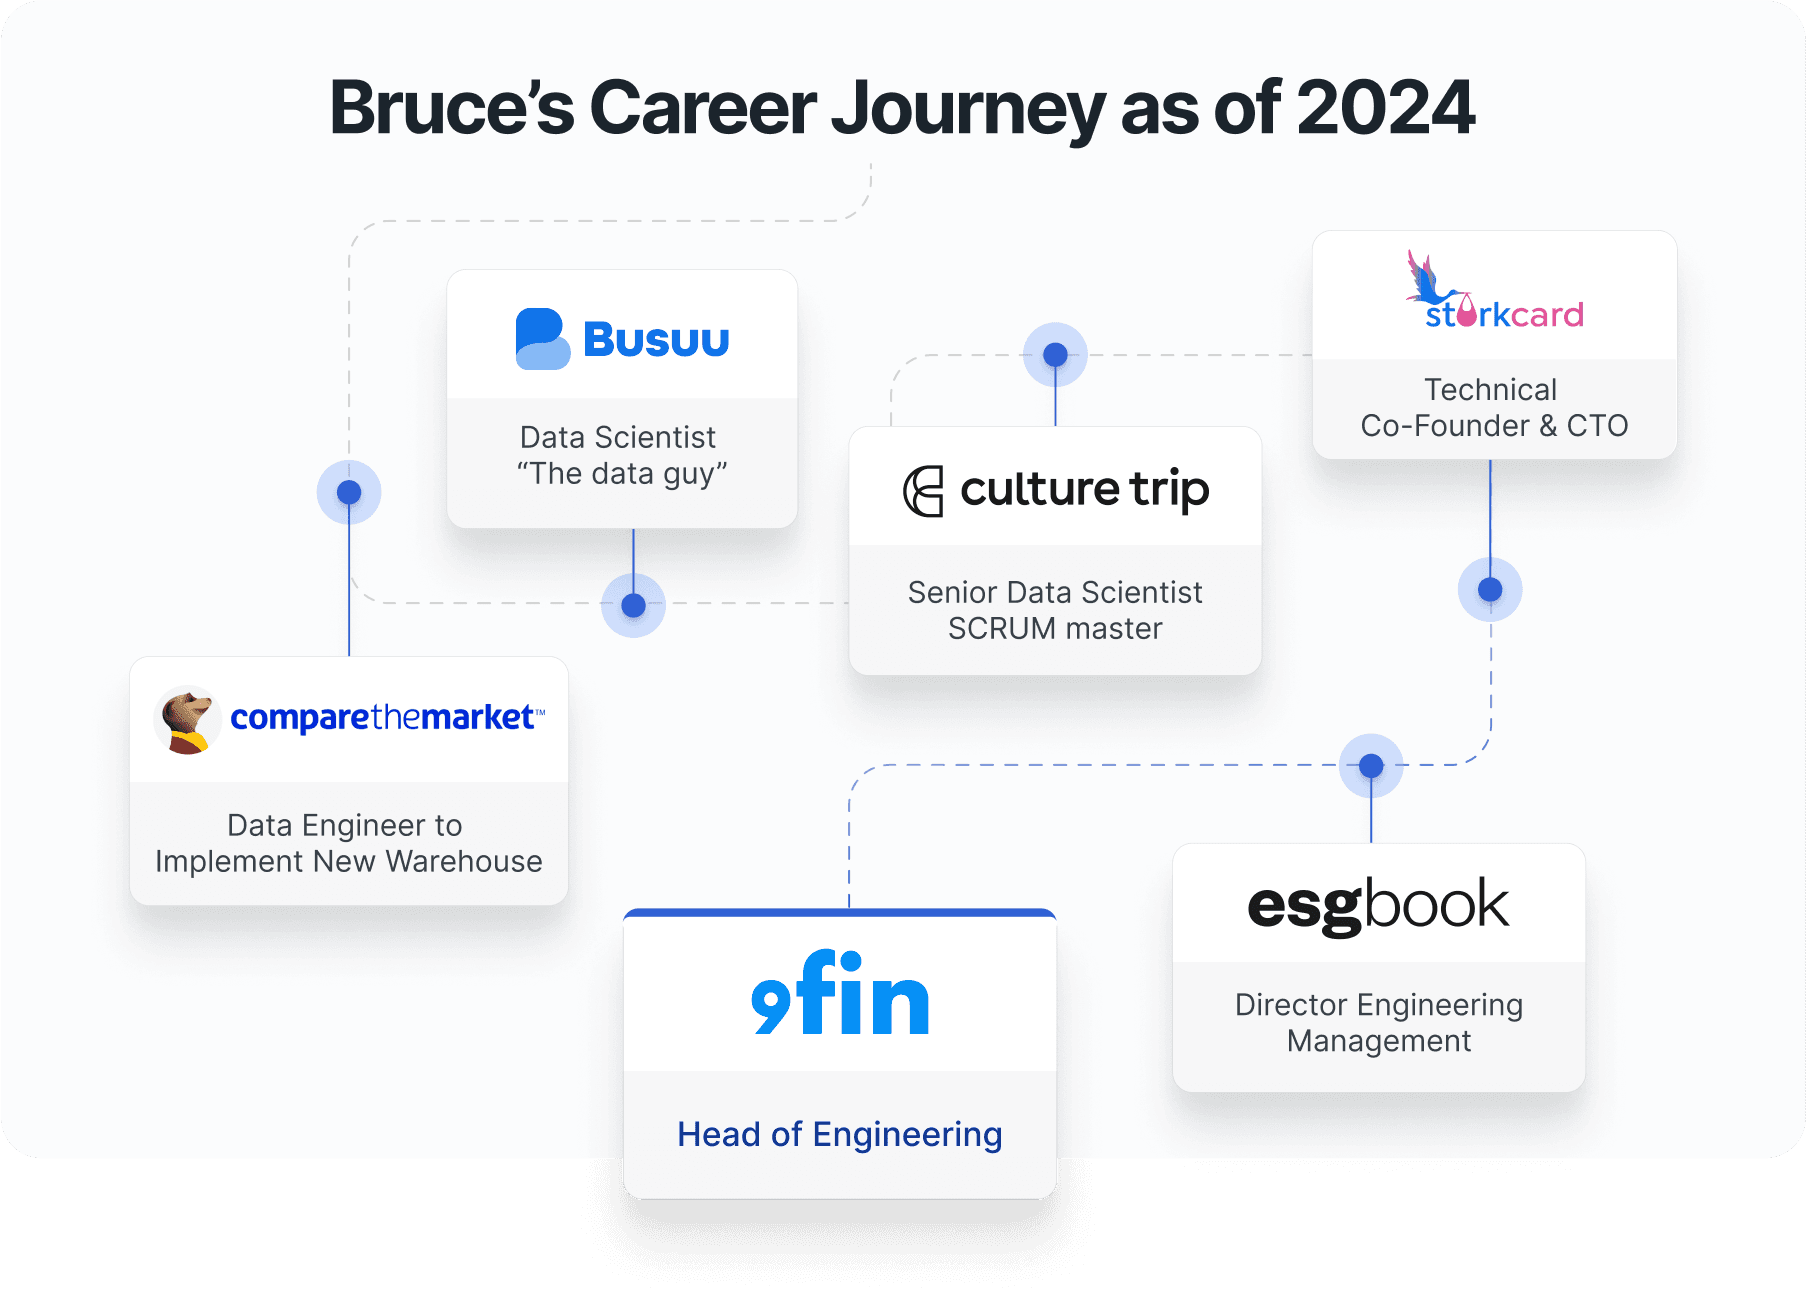 Bruce Pannaman's career journey